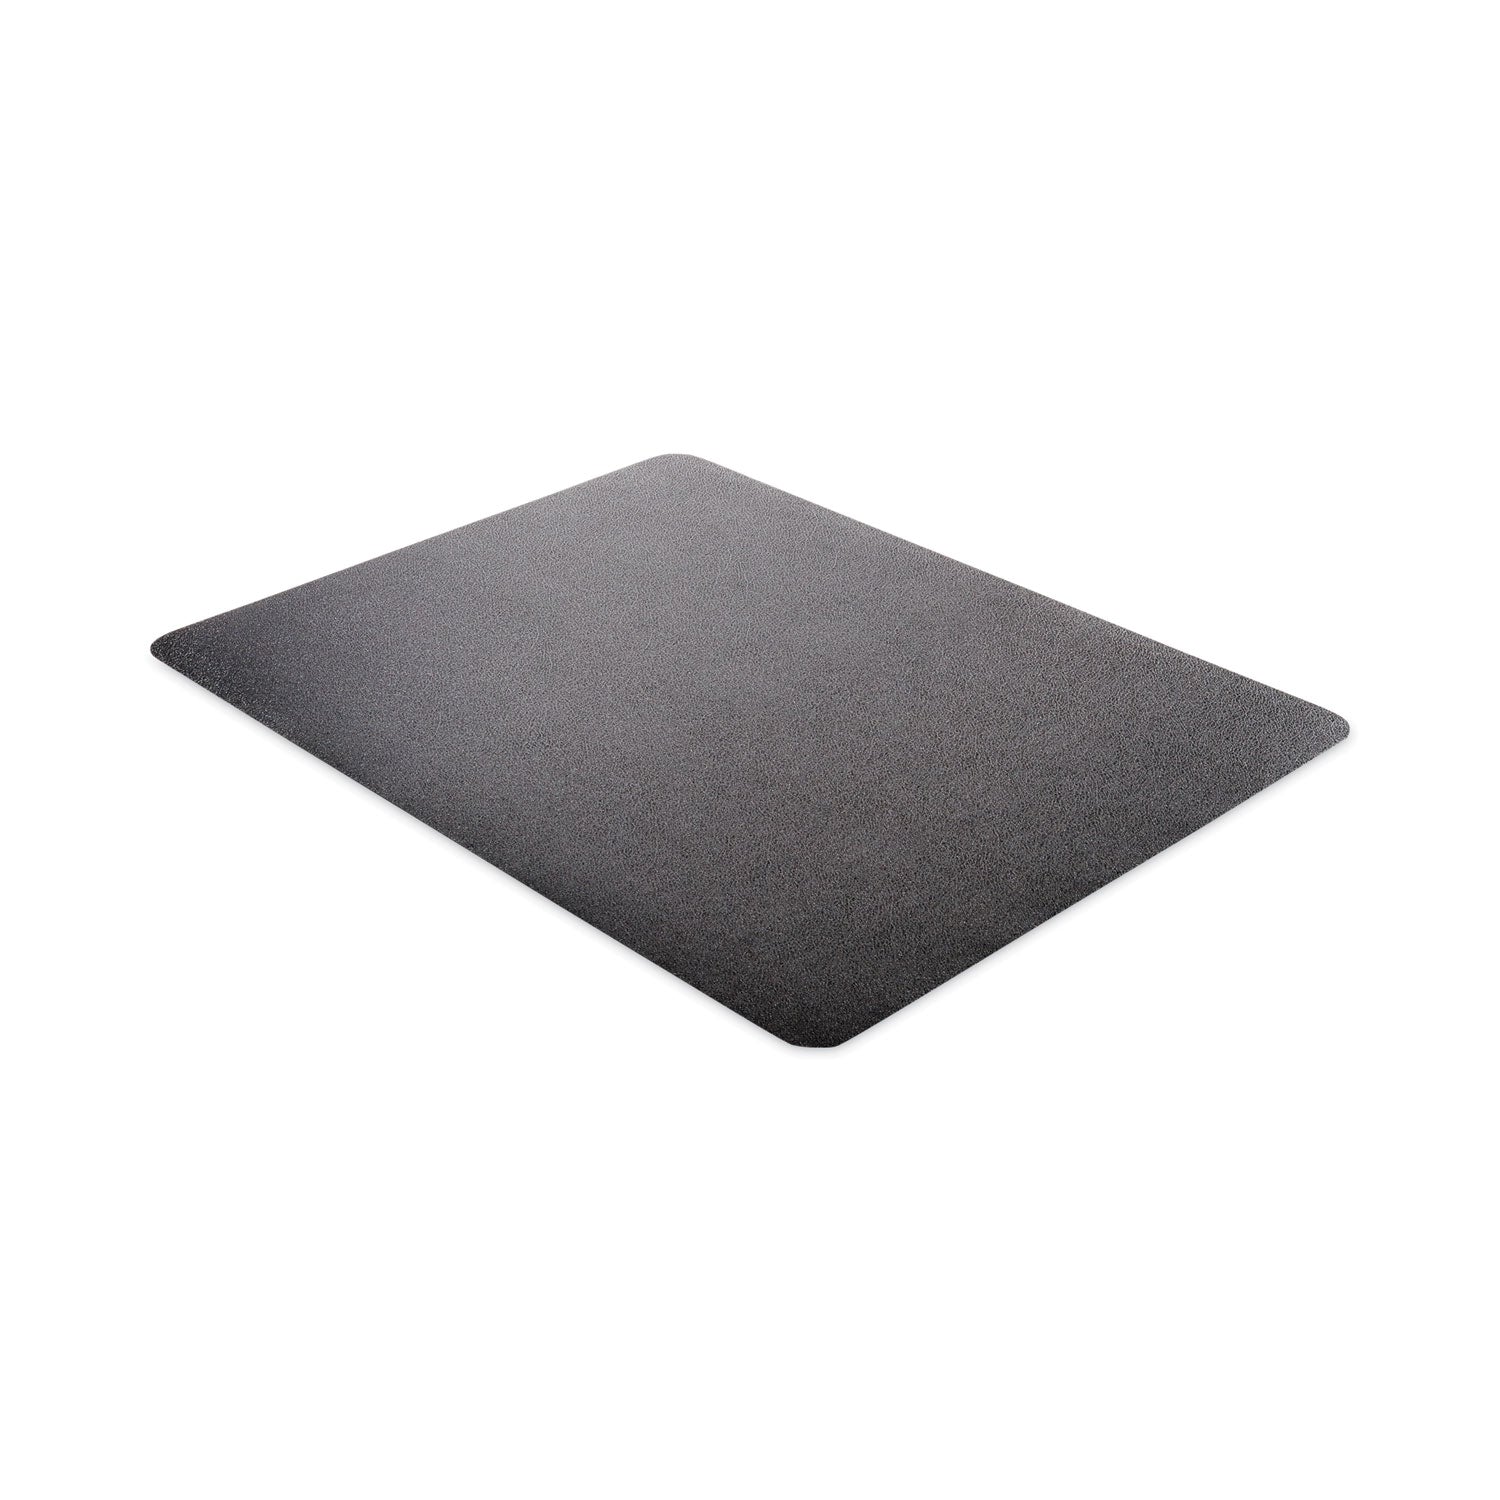 SuperMat Frequent Use Chair Mat for Medium Pile Carpet, 45 x 53, Rectangular, Black - 